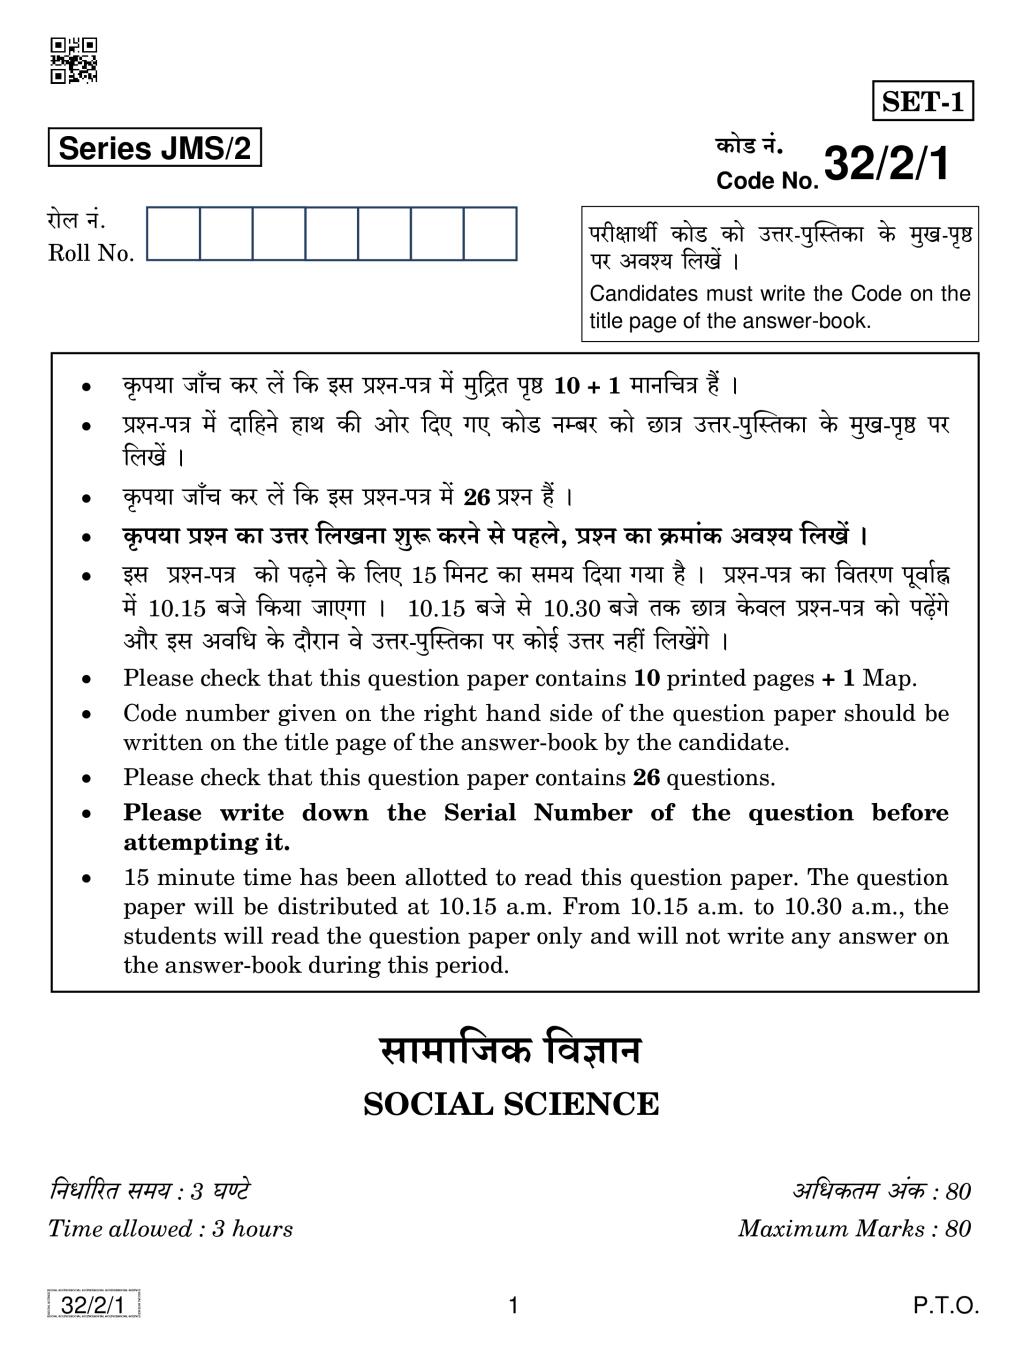 CBSE Class 10 Social Science Question Paper 2019 Set 2 - Page 1